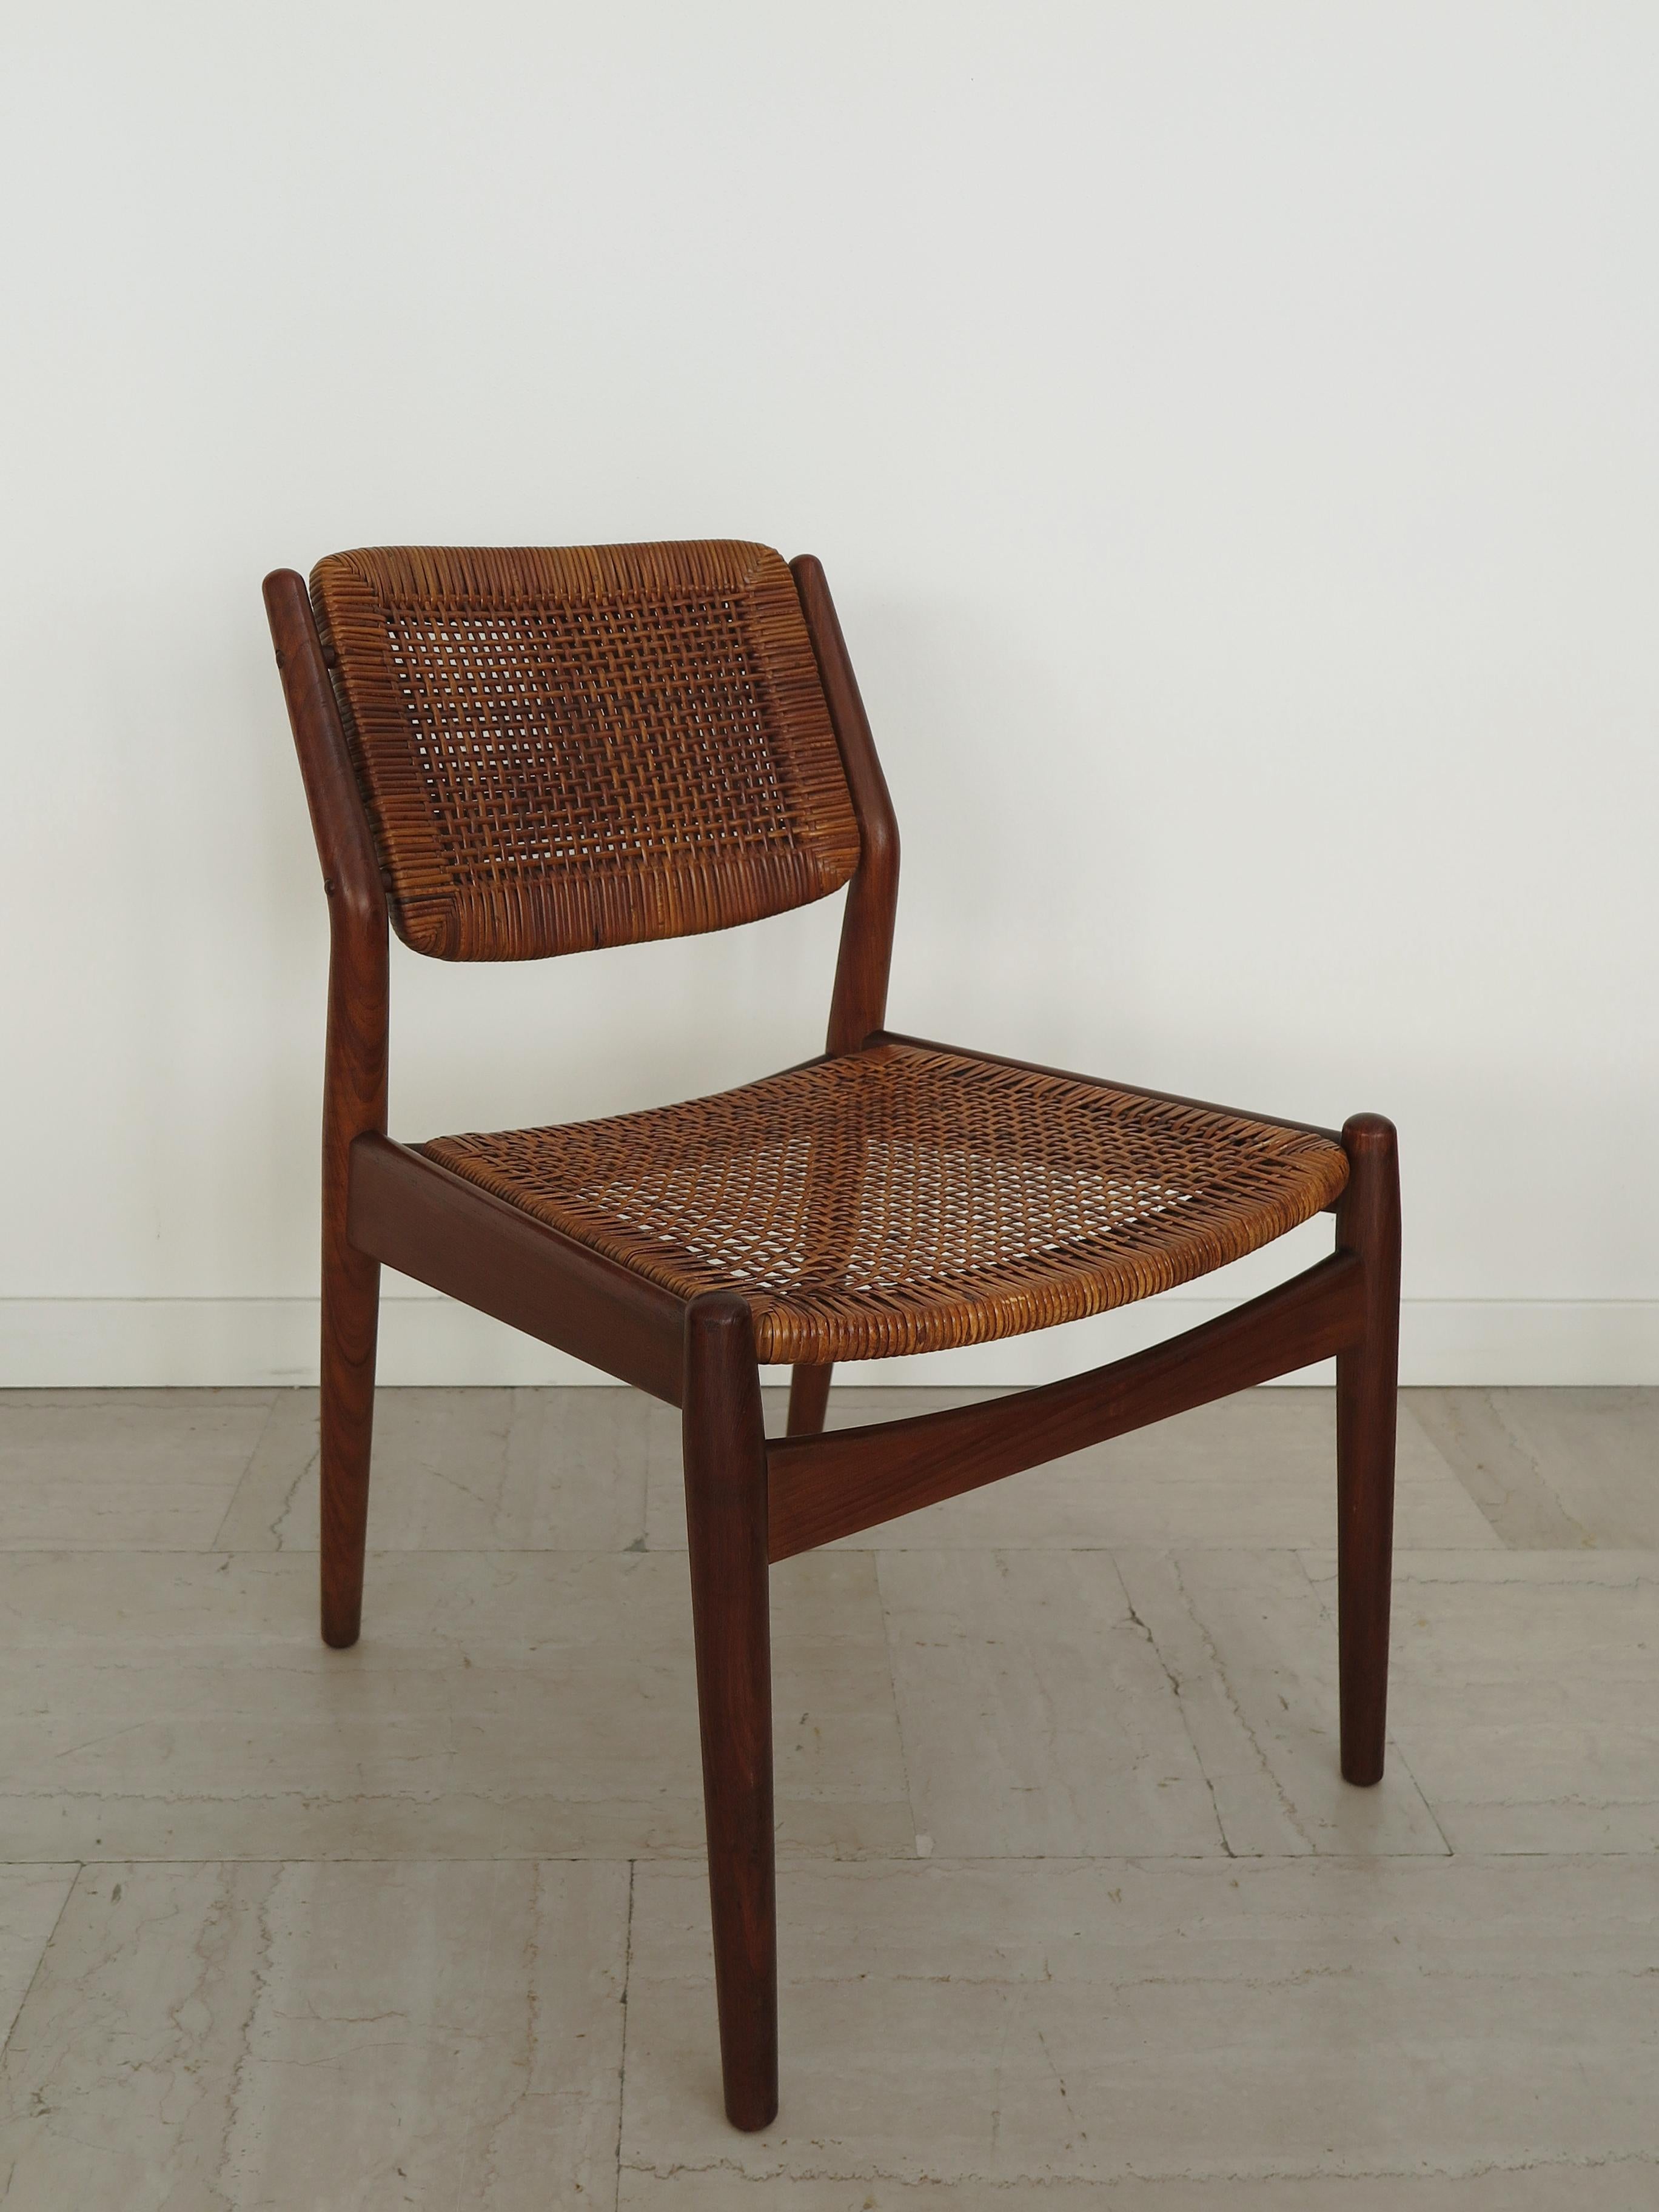 Cane Arne Vodder Midcentury Scandinavian Teak Rattan Chairs for Sibast 1950s For Sale